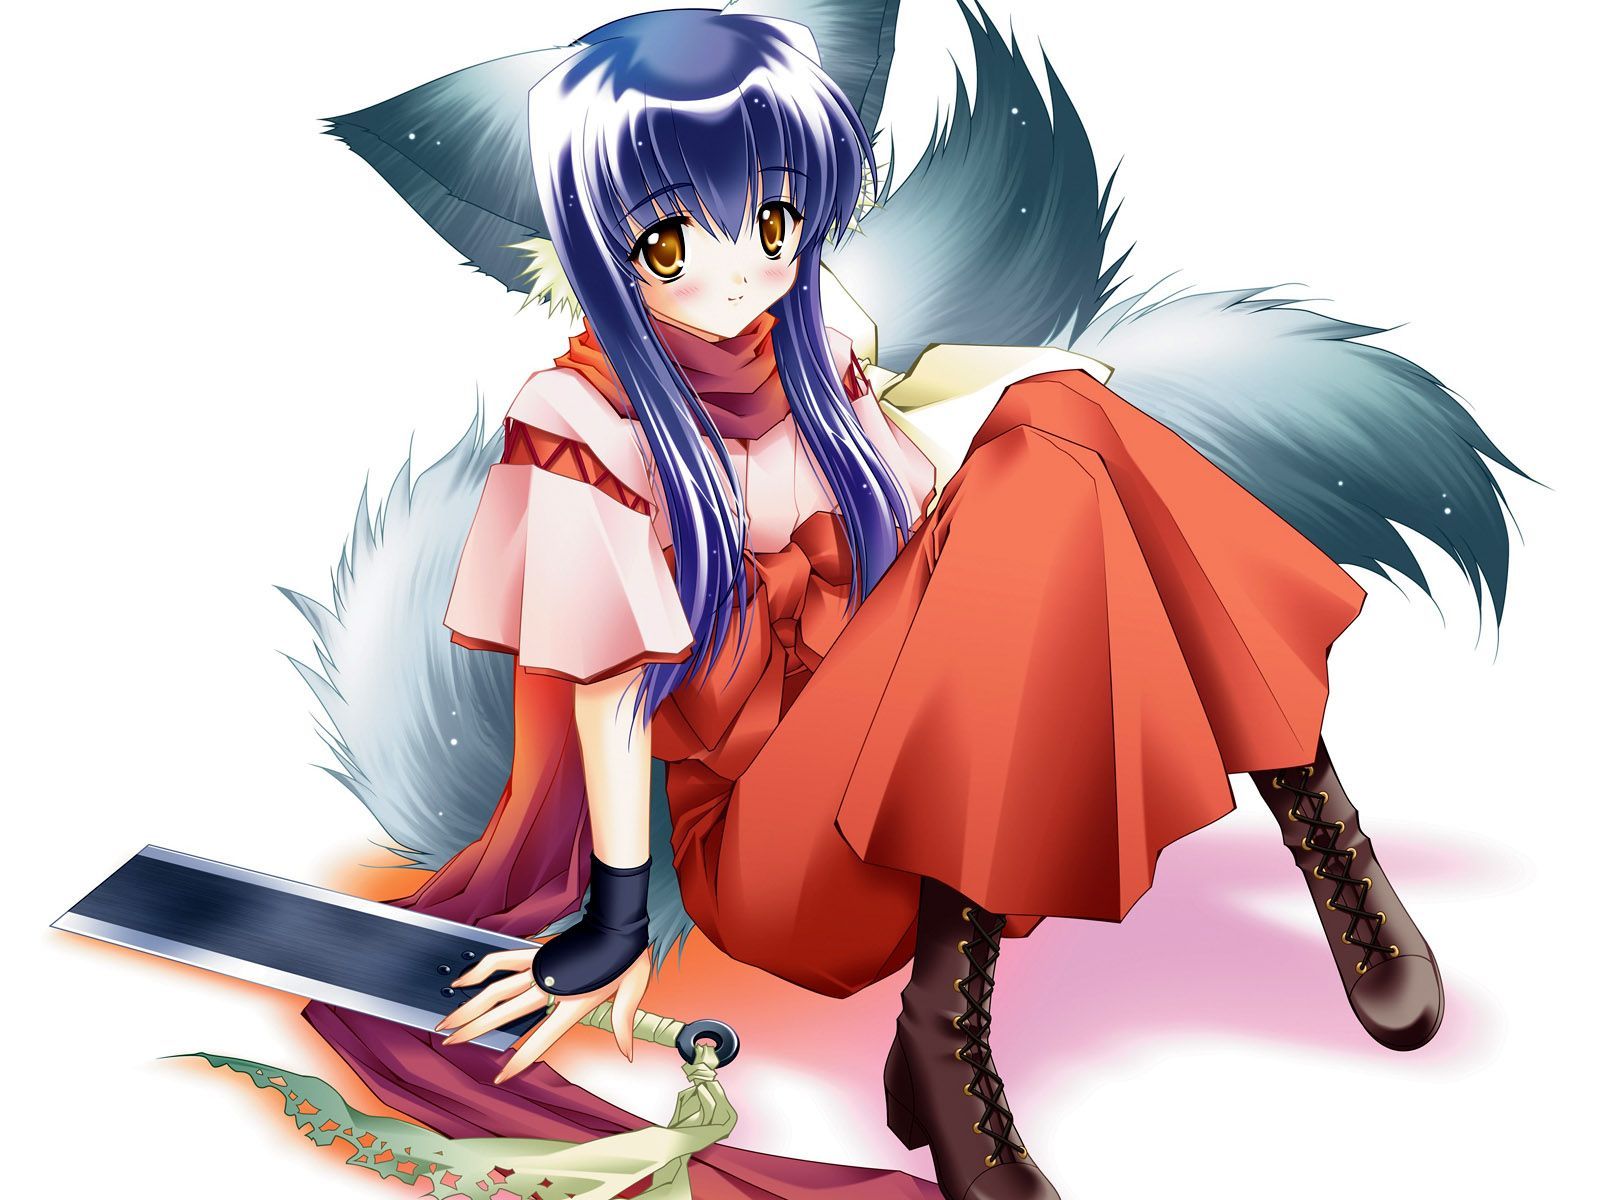 anime cat girl. Little girl wallpaper and image. Anime wolf